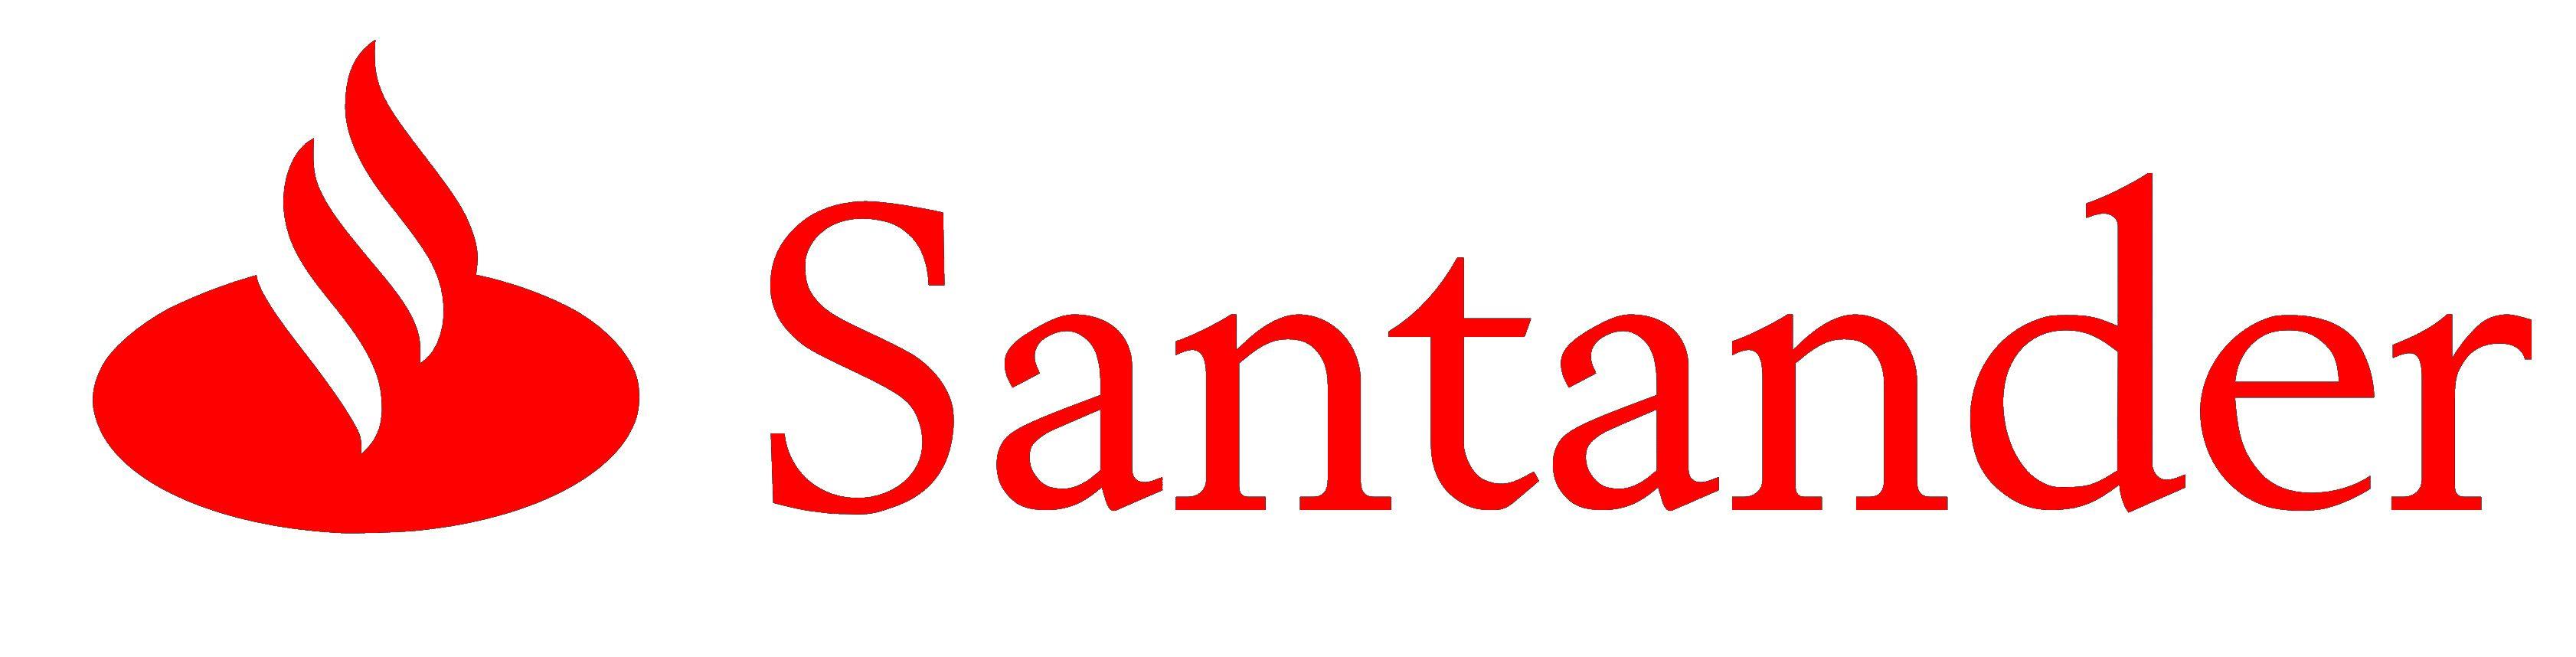 Red and White Bank Logo - Santander Logo, Santander Symbol, Meaning, History and Evolution